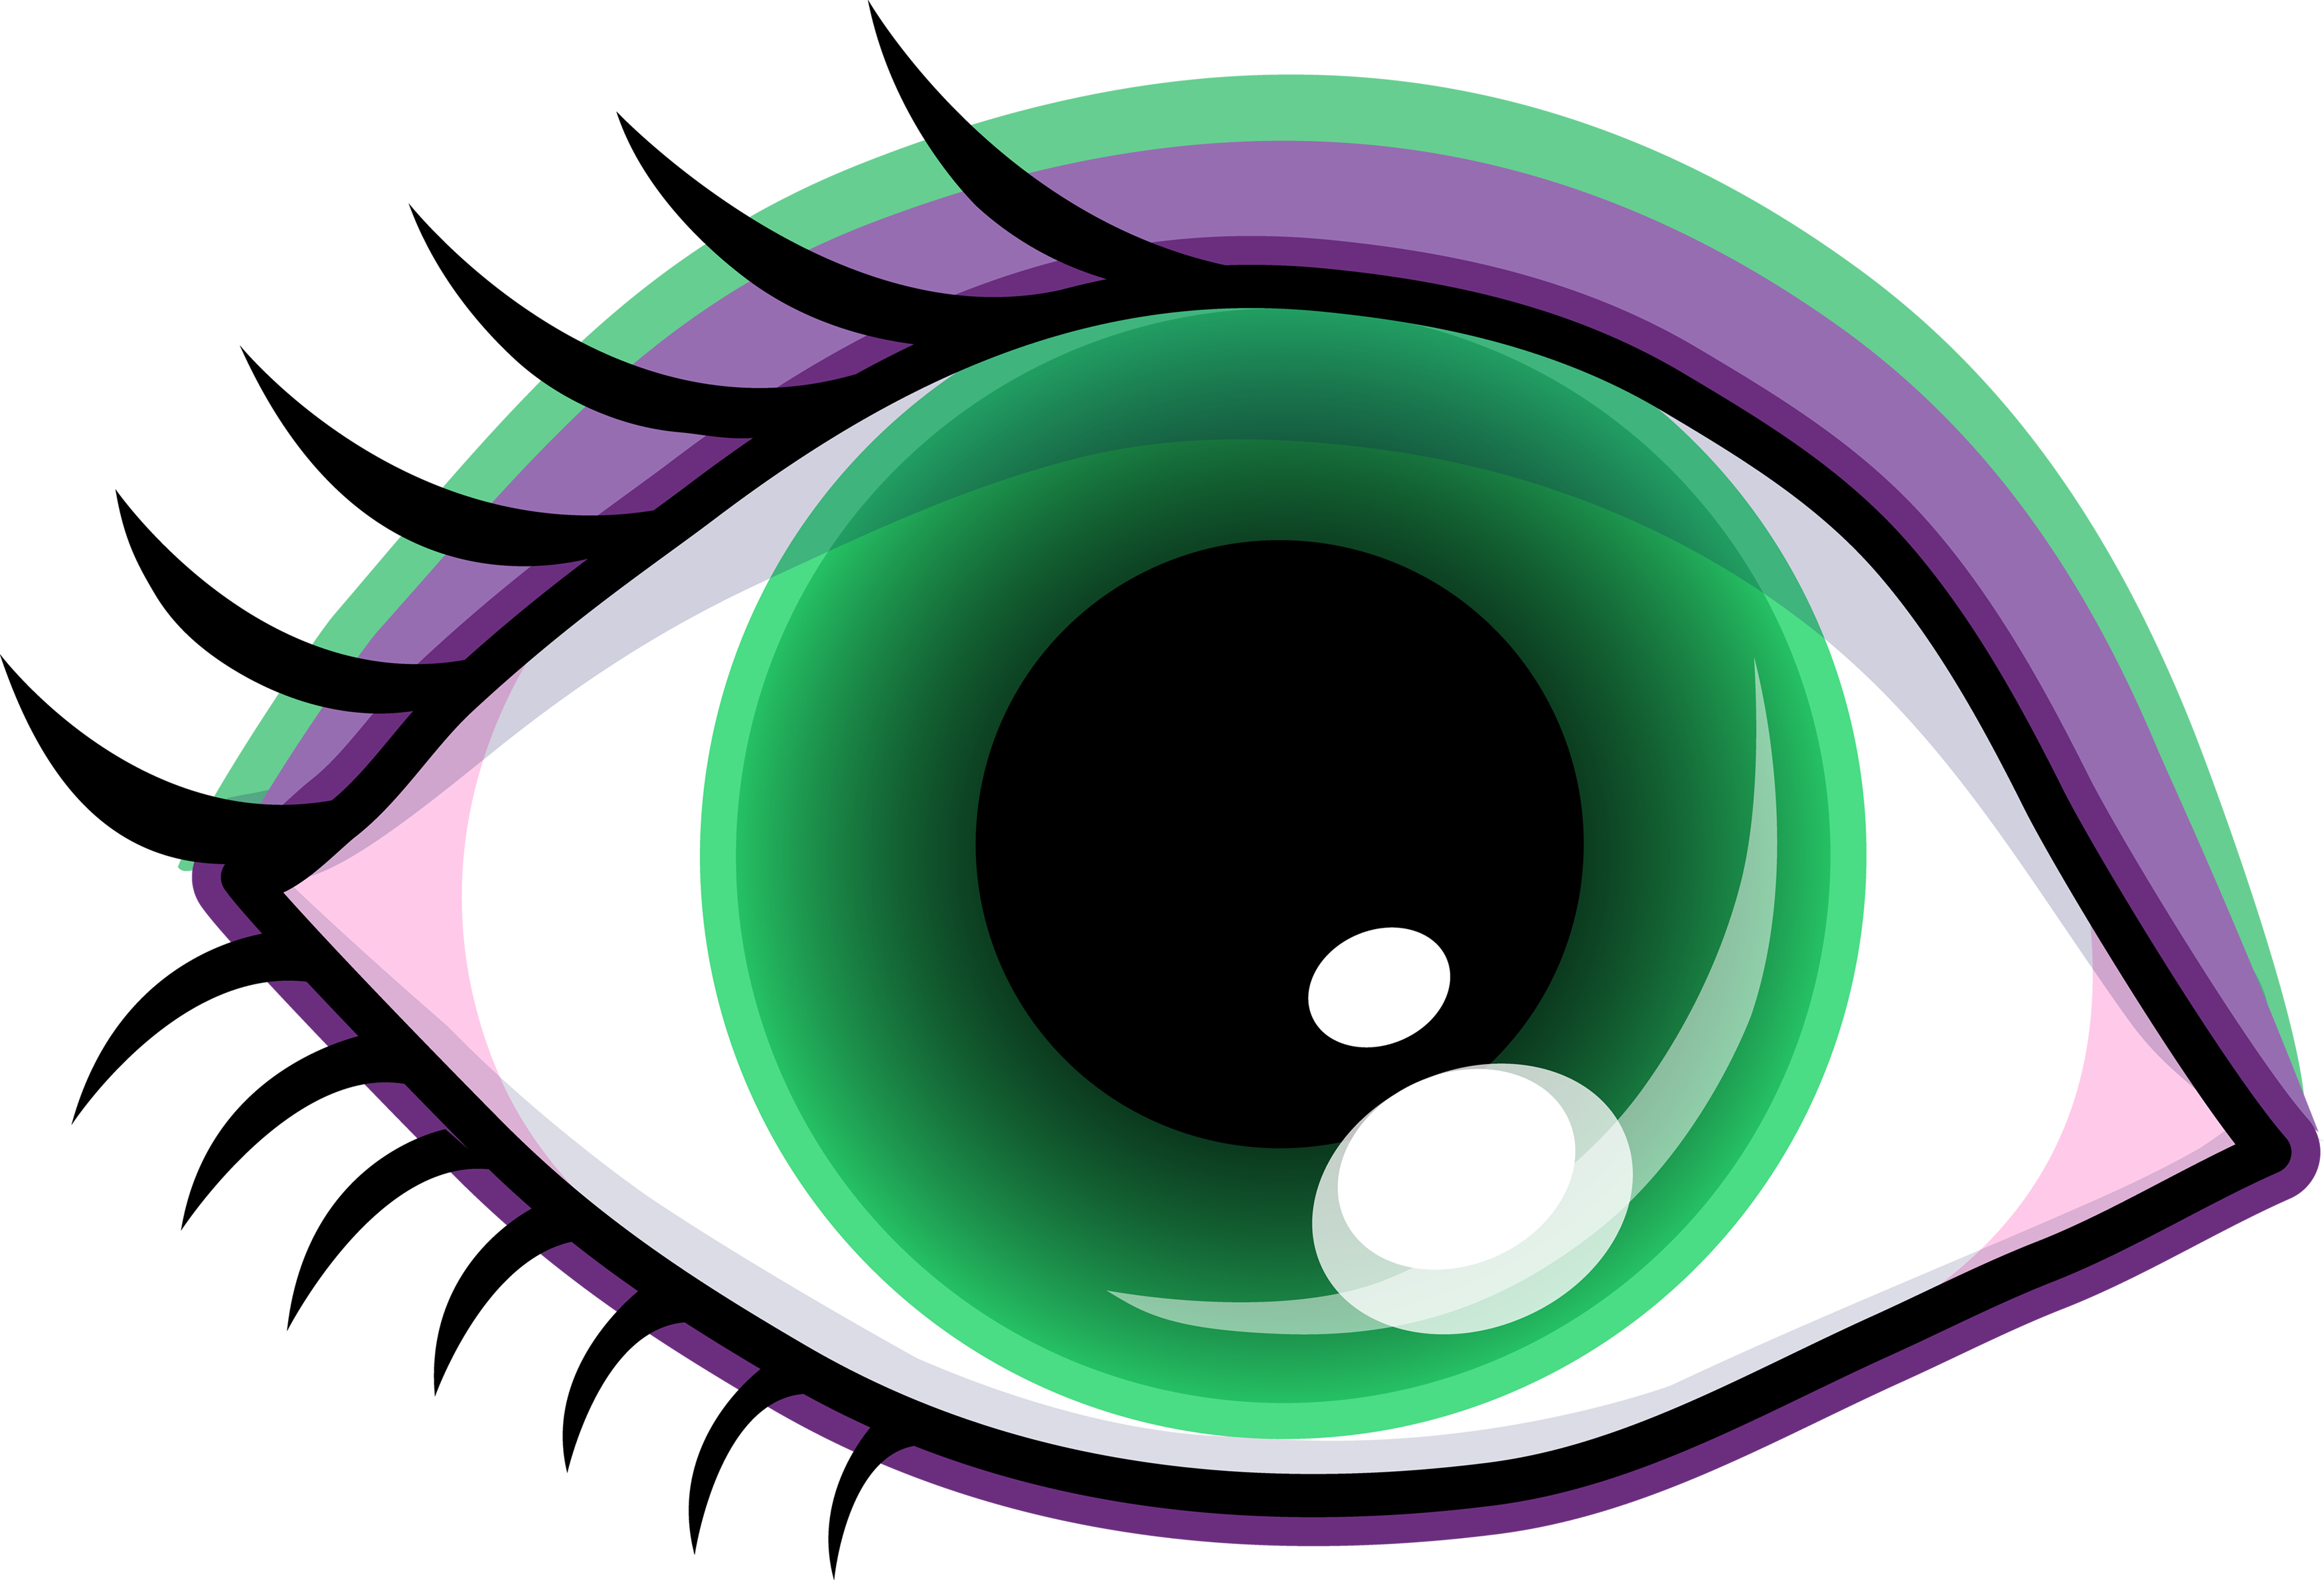 Pretty Green Eye drawing free image download